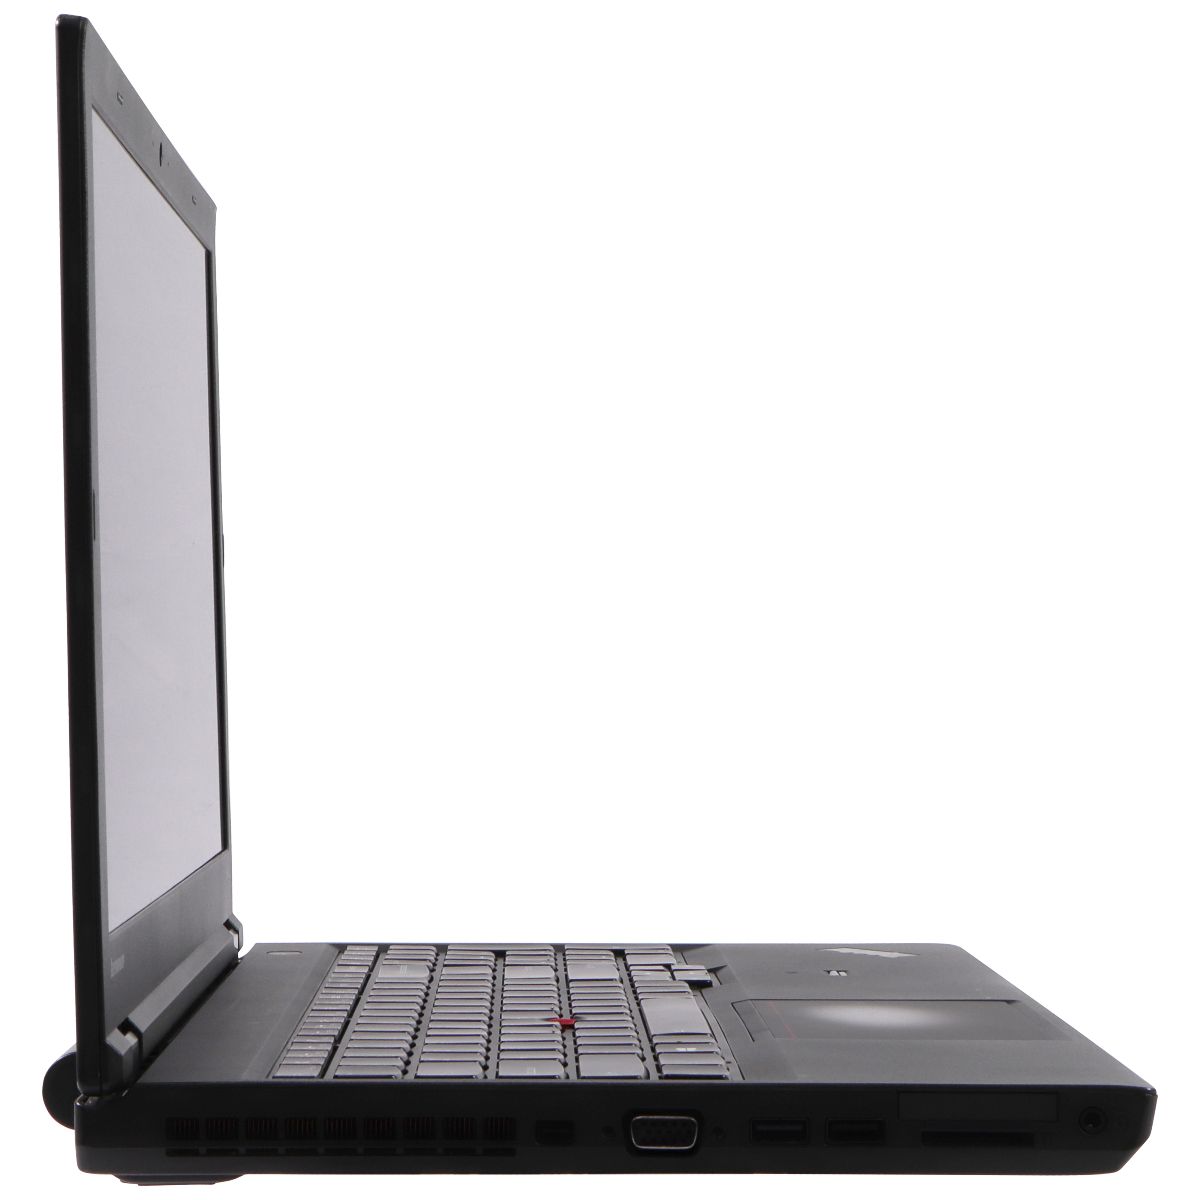 Lenovo ThinkPad W540 15.6-in FHD Laptop i7-4800MQ/256GB SSD/16GB/10 Home Laptops - PC Laptops & Netbooks Lenovo    - Simple Cell Bulk Wholesale Pricing - USA Seller